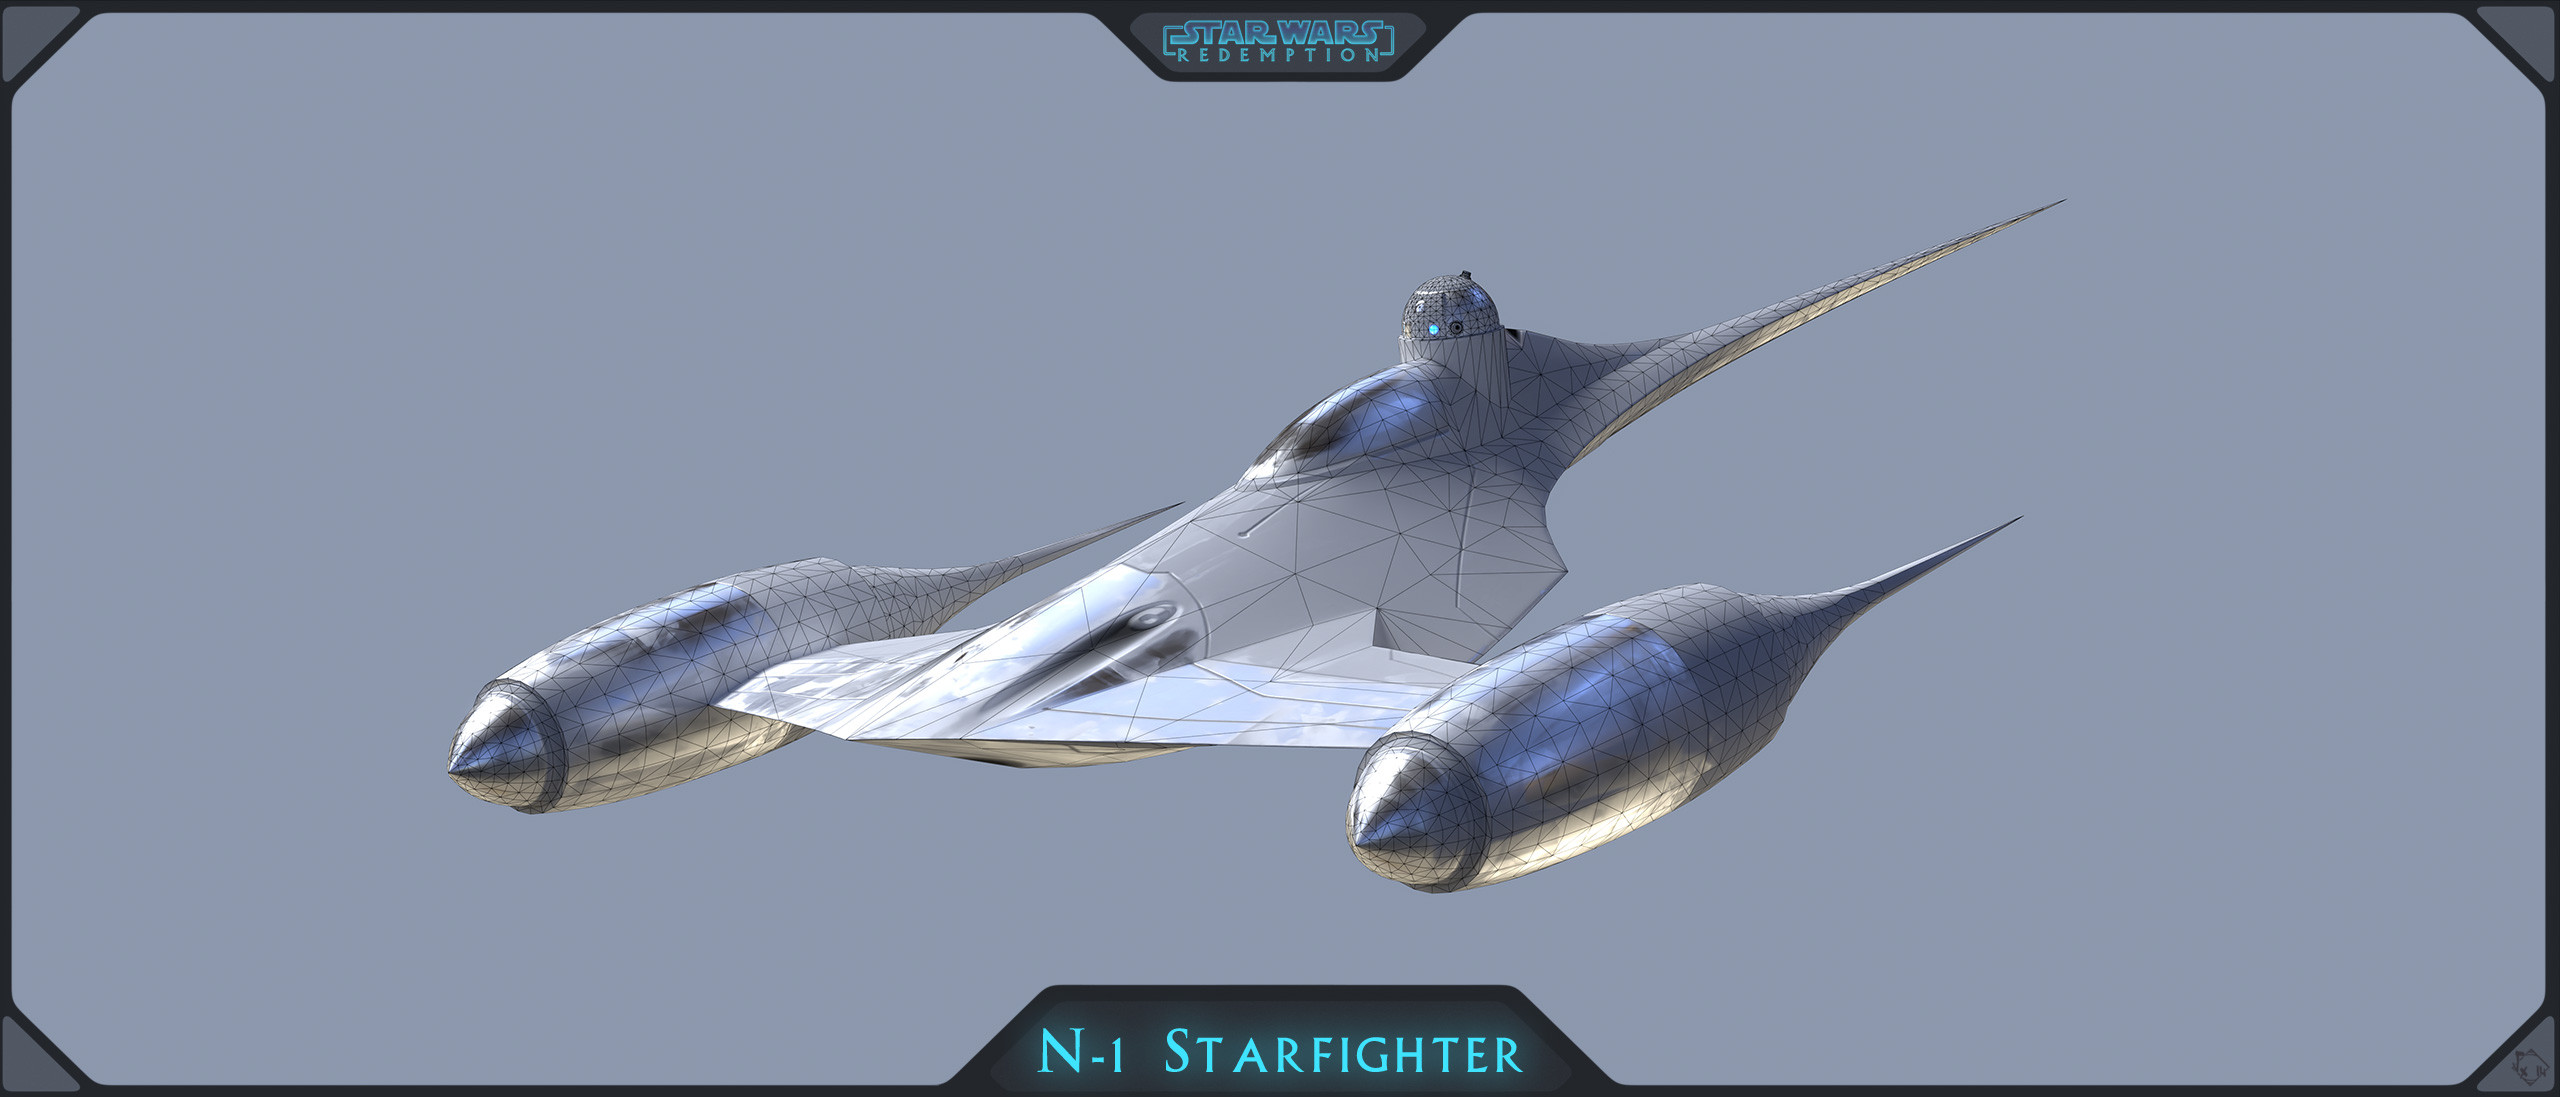 etienne-beschet-rd-prp-starfighter-n-1-1